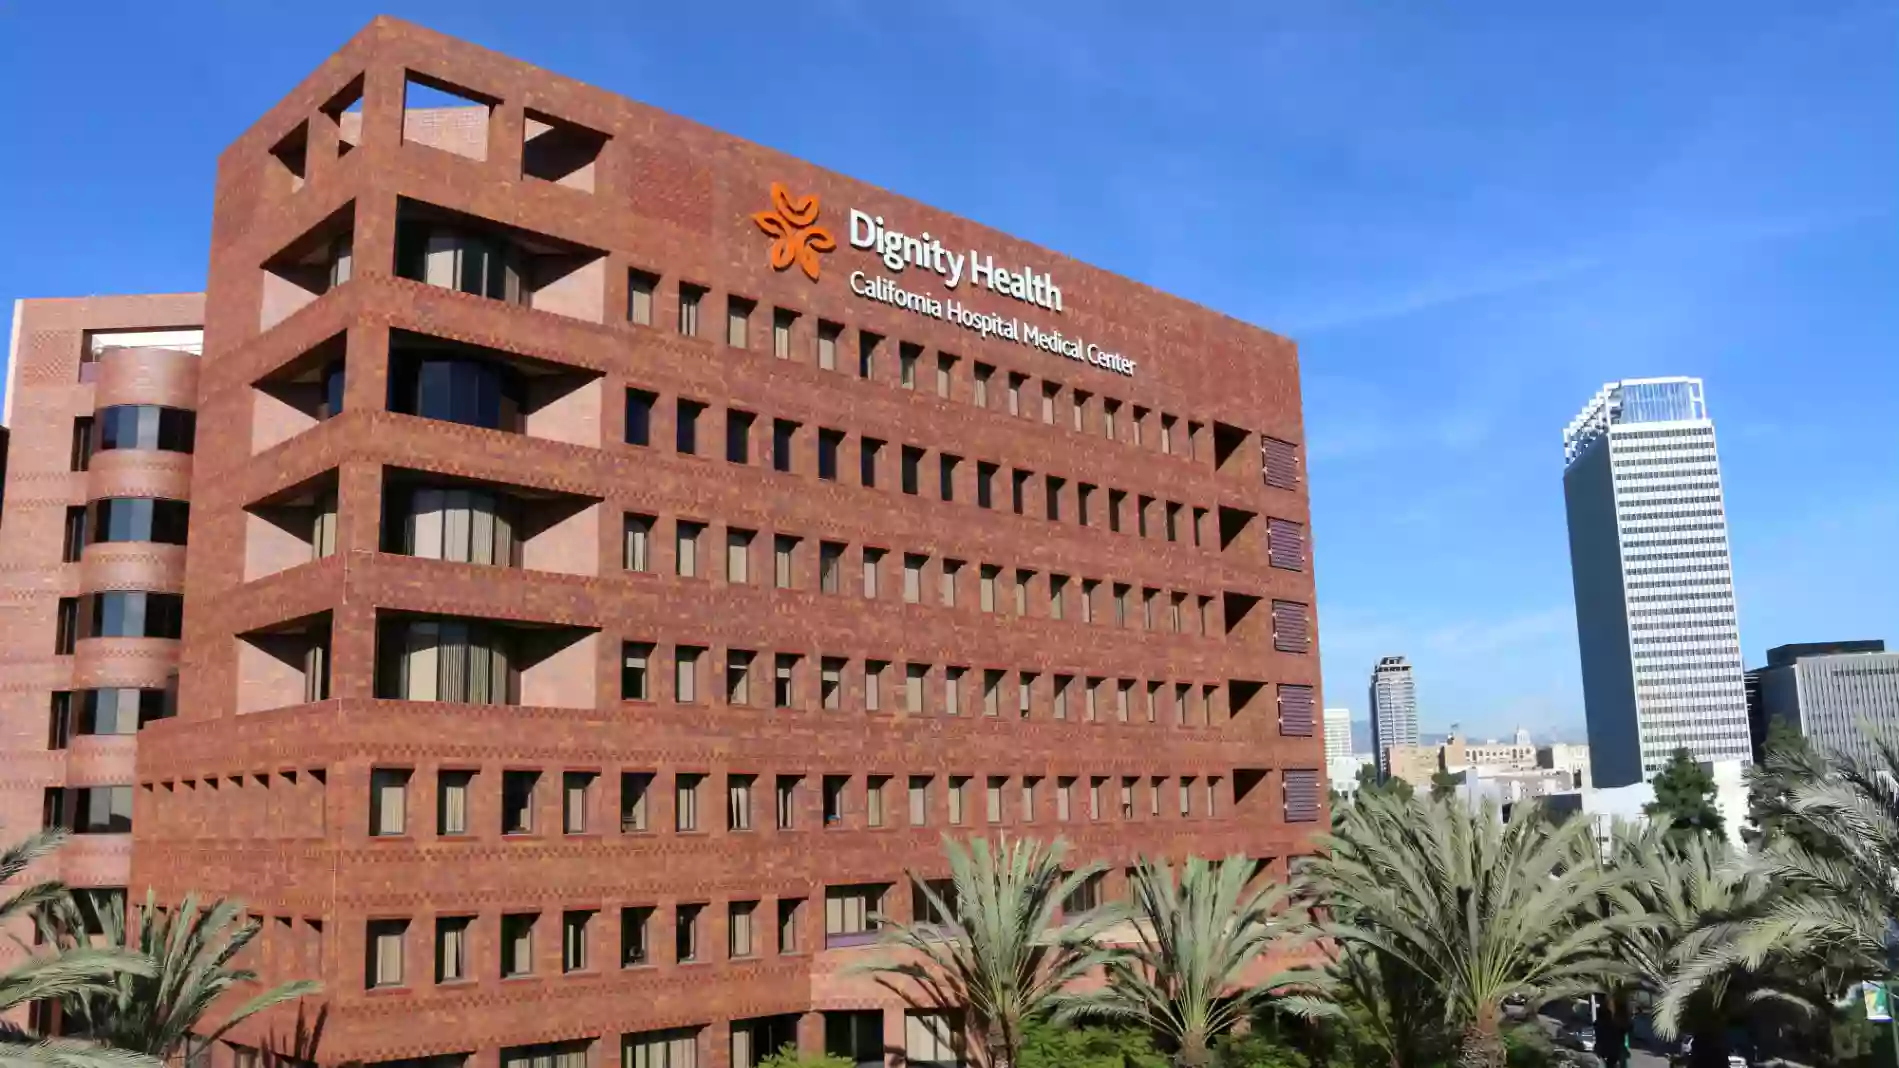 Dignity Health - California Hospital Medical Center